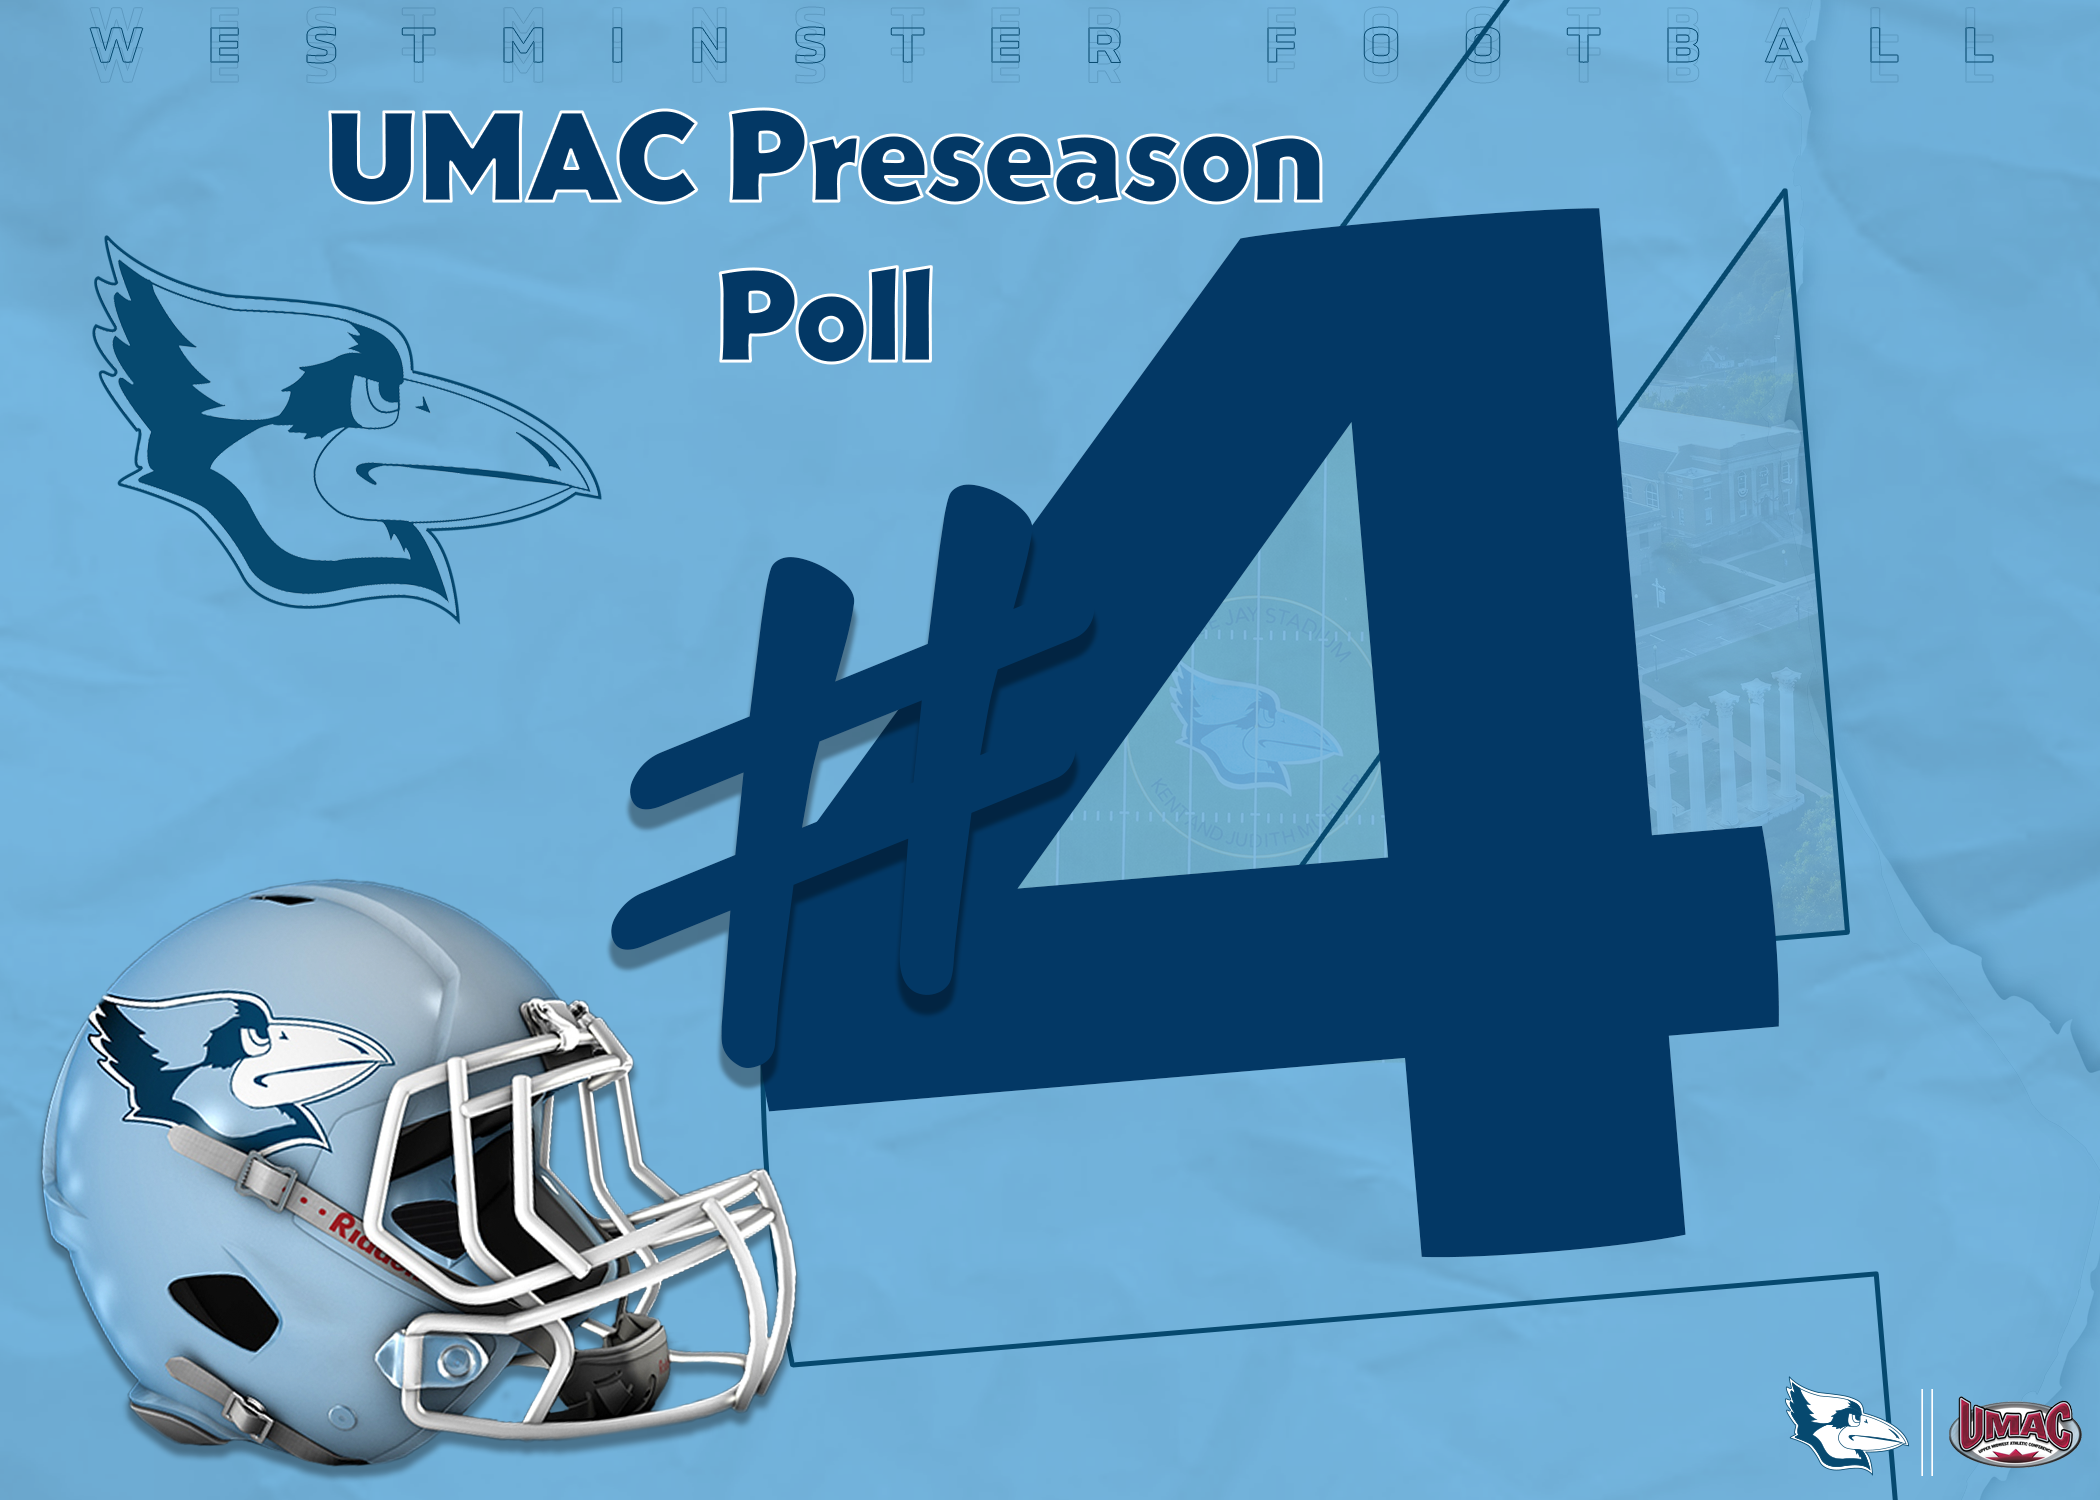 Blue Jays Picked Fourth In UMAC Preseason Coaches Poll